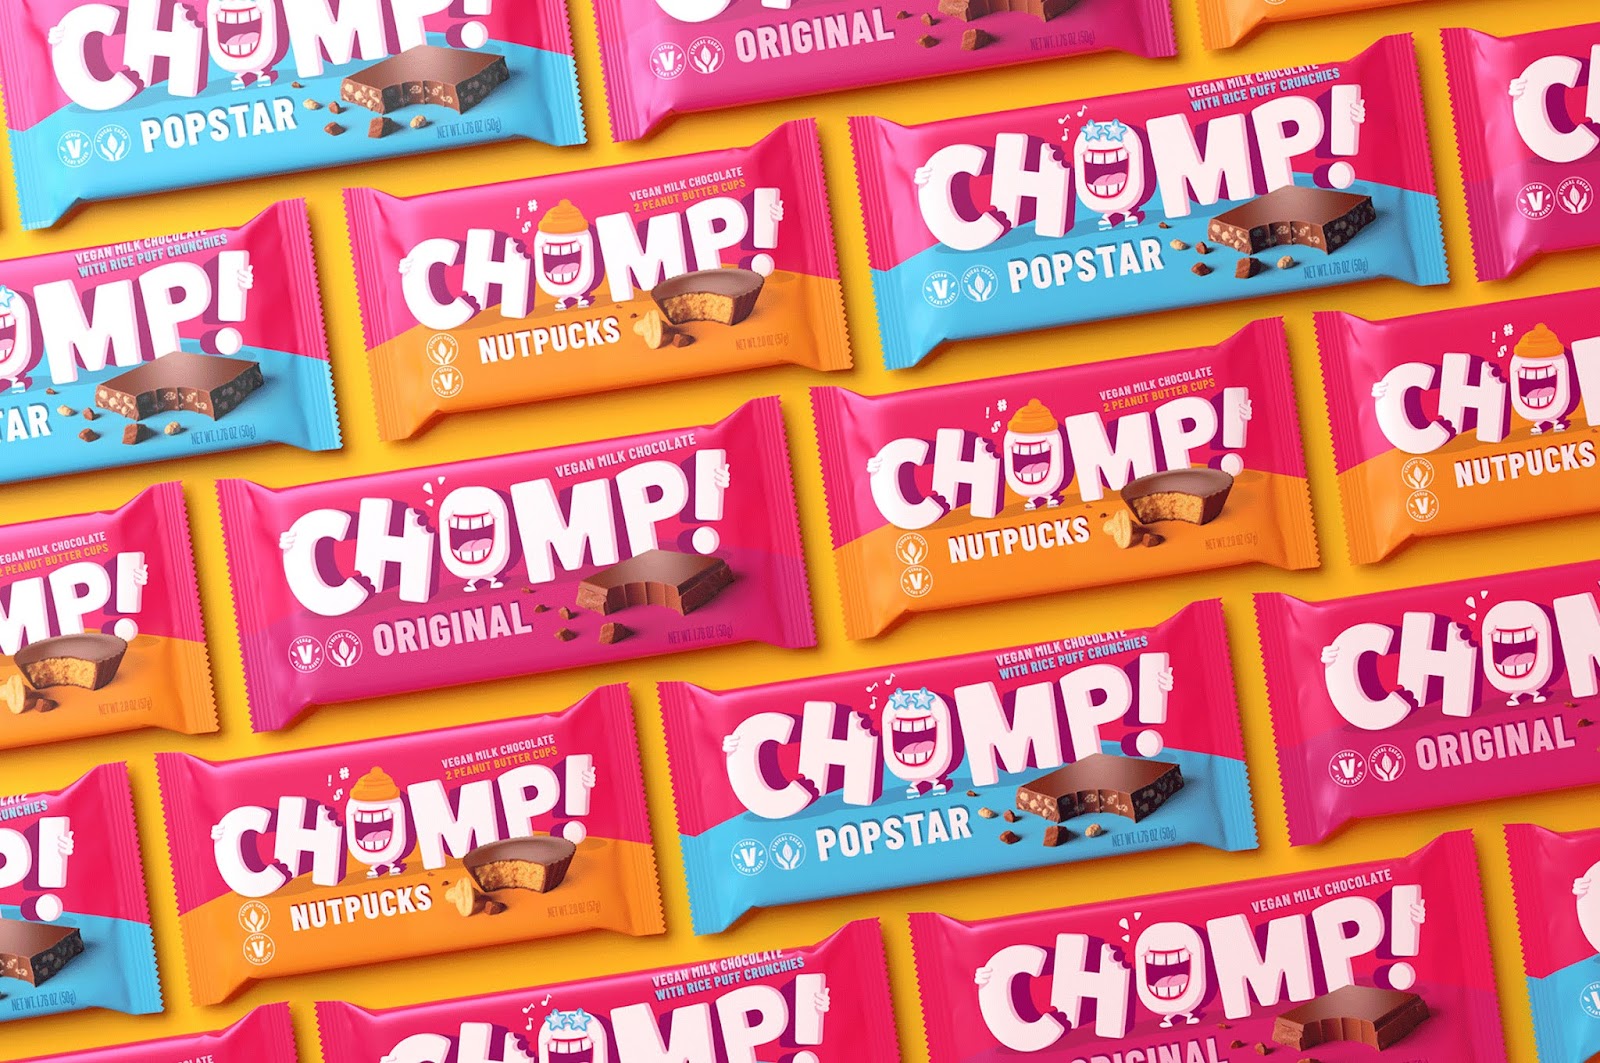 Popstar – Chomp! Chocolate